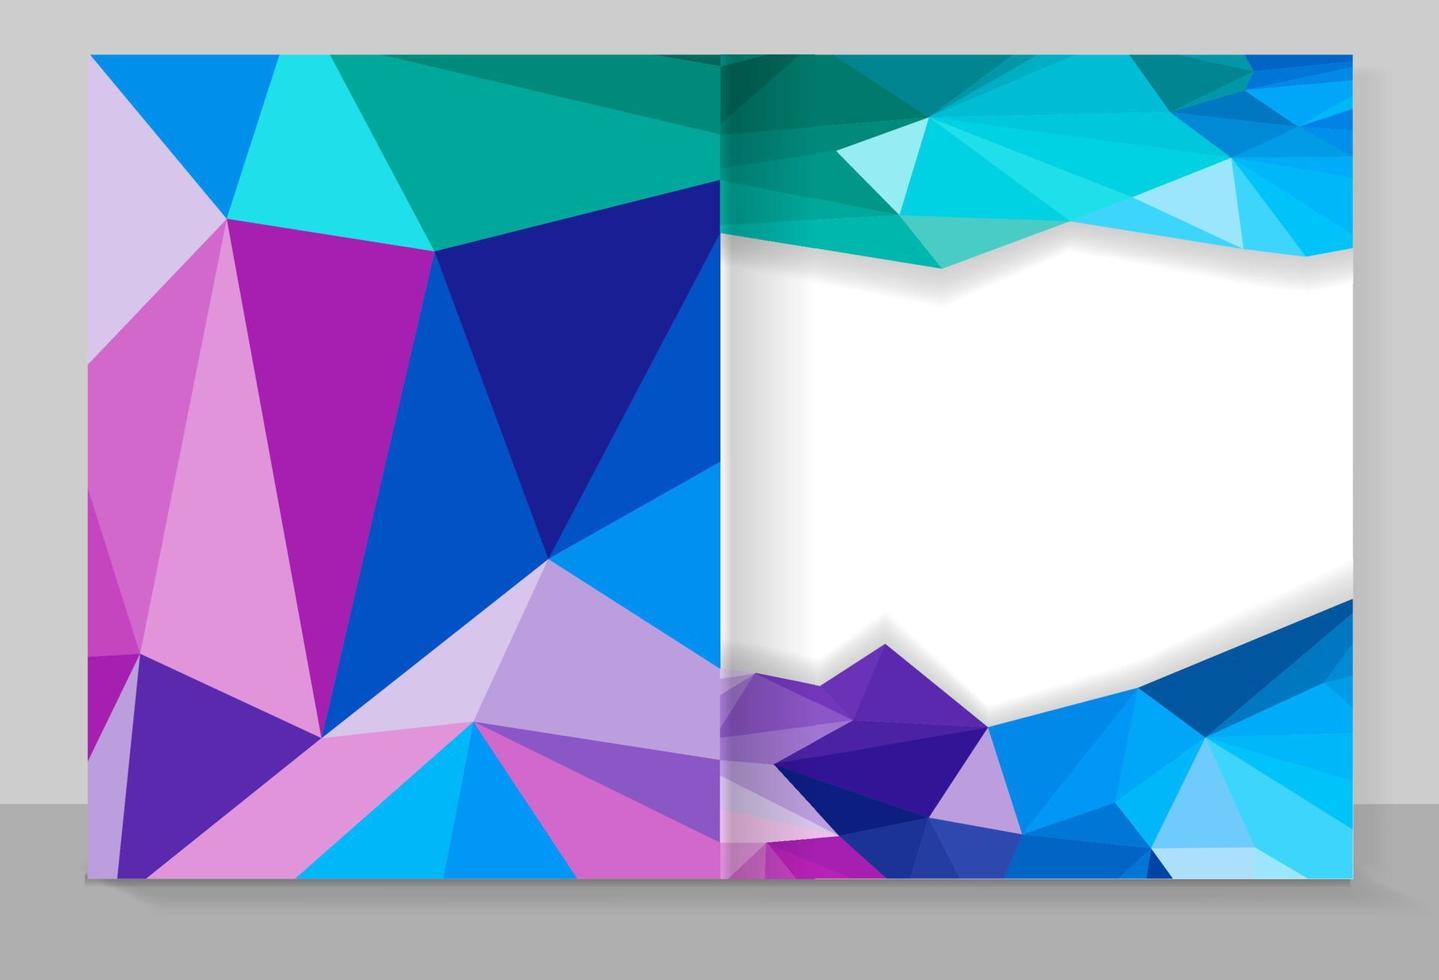 omslag häfte med triangel mönster, abstrakt bakgrund, geometrisk vektor design.